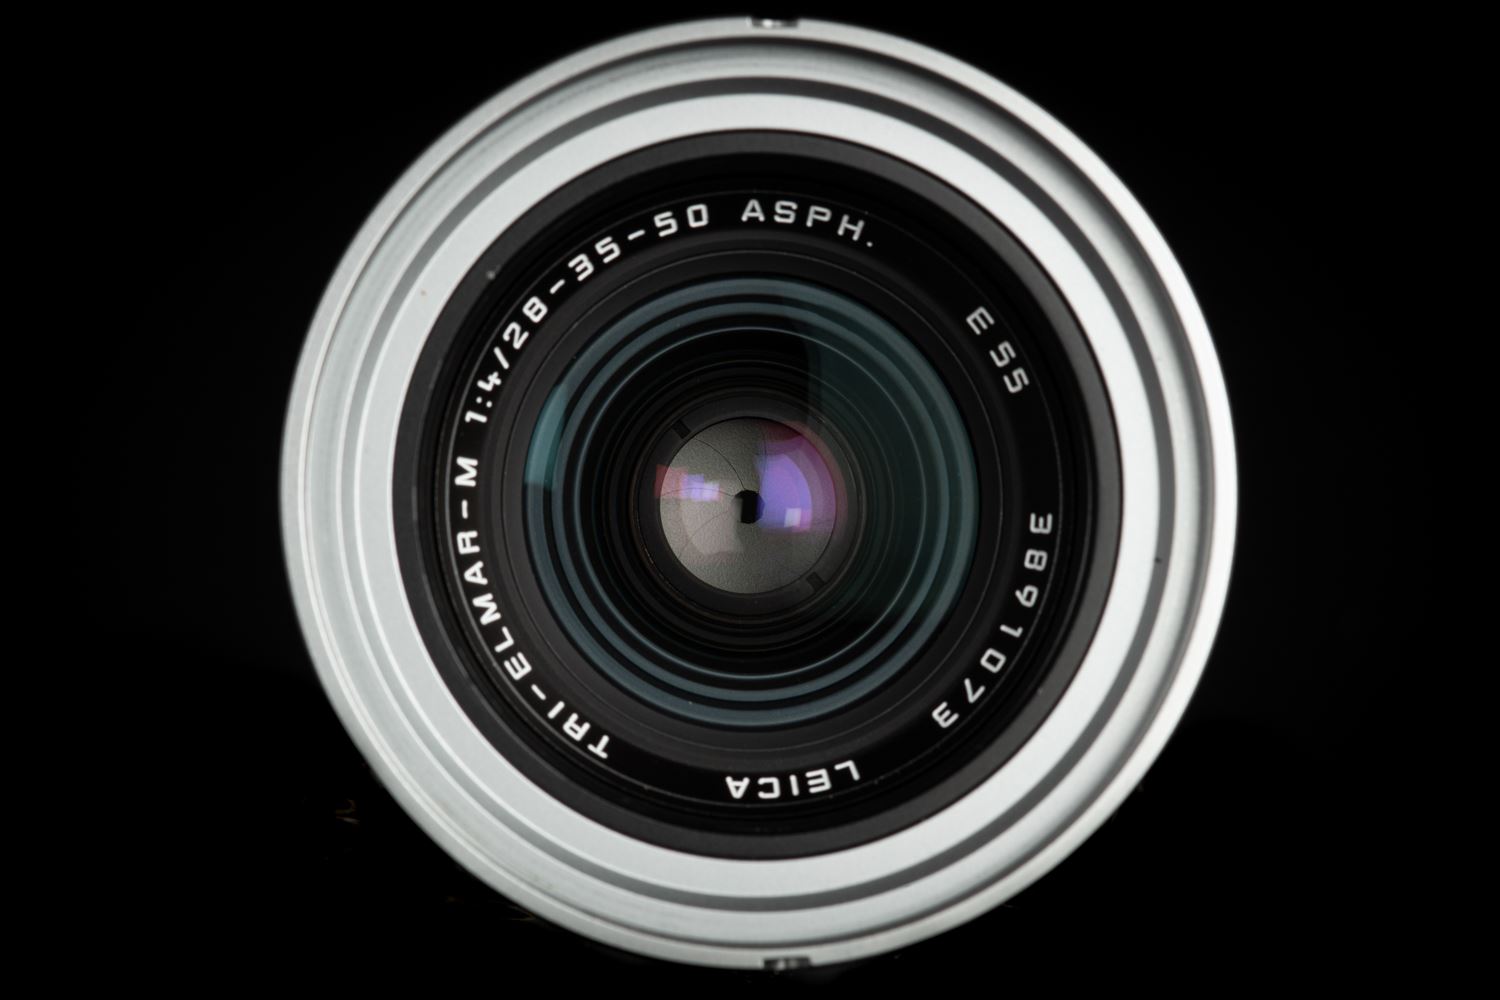 Picture of Leica M6 Historica 1975-1995 Full Set